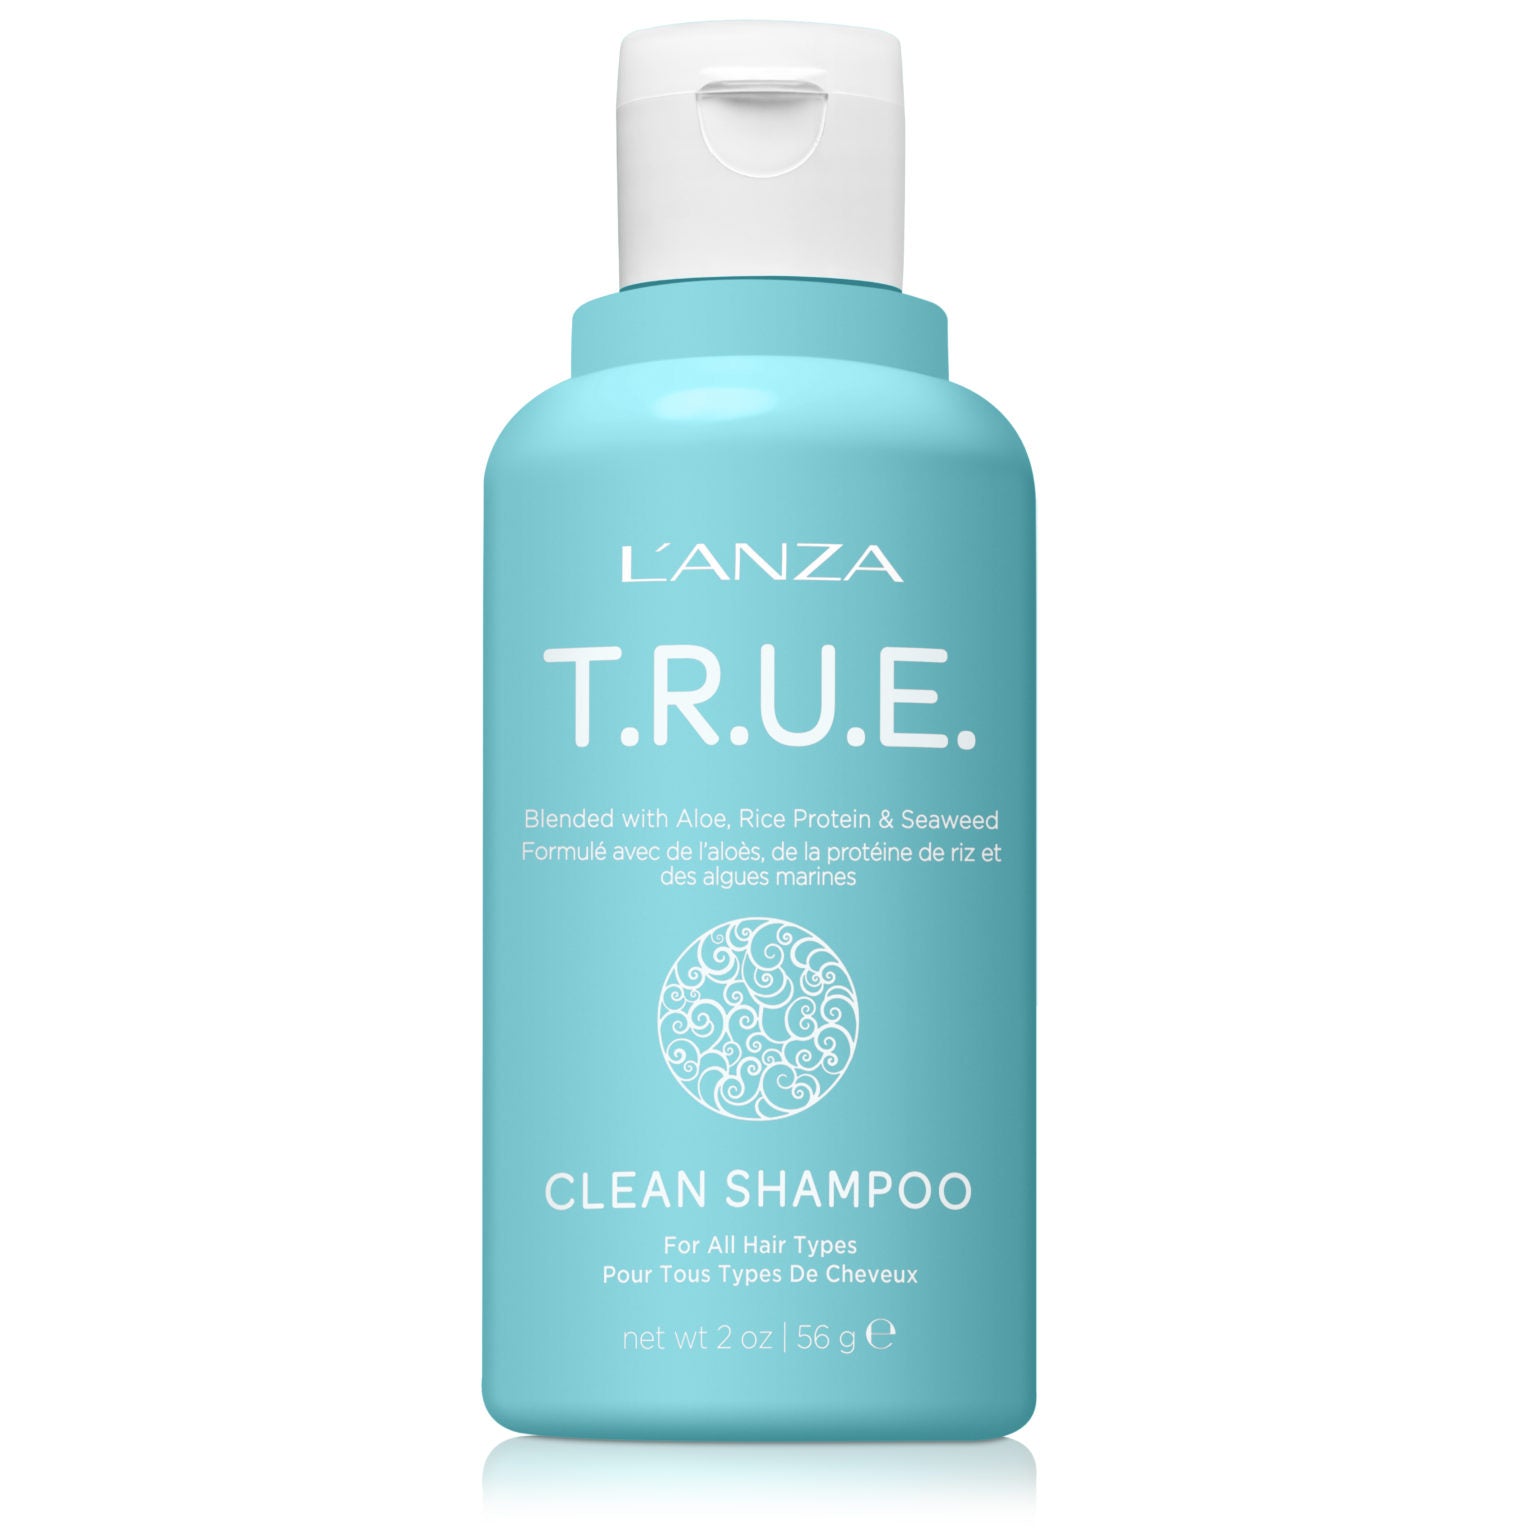 L’ANZA T.R.U.E. Clean Shampoo